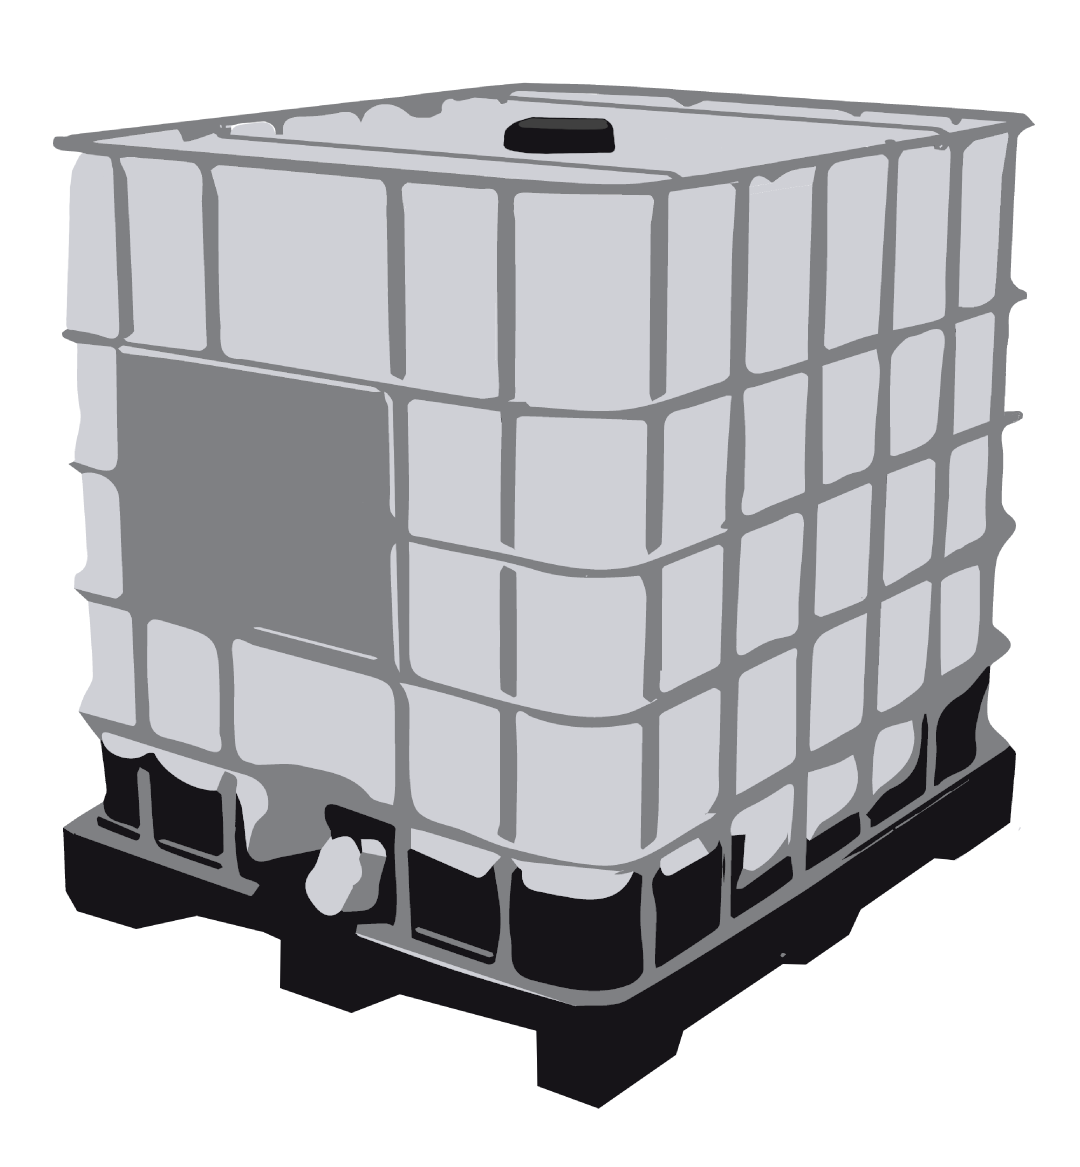 Hazardous Waste - Lockable, Secure Containers